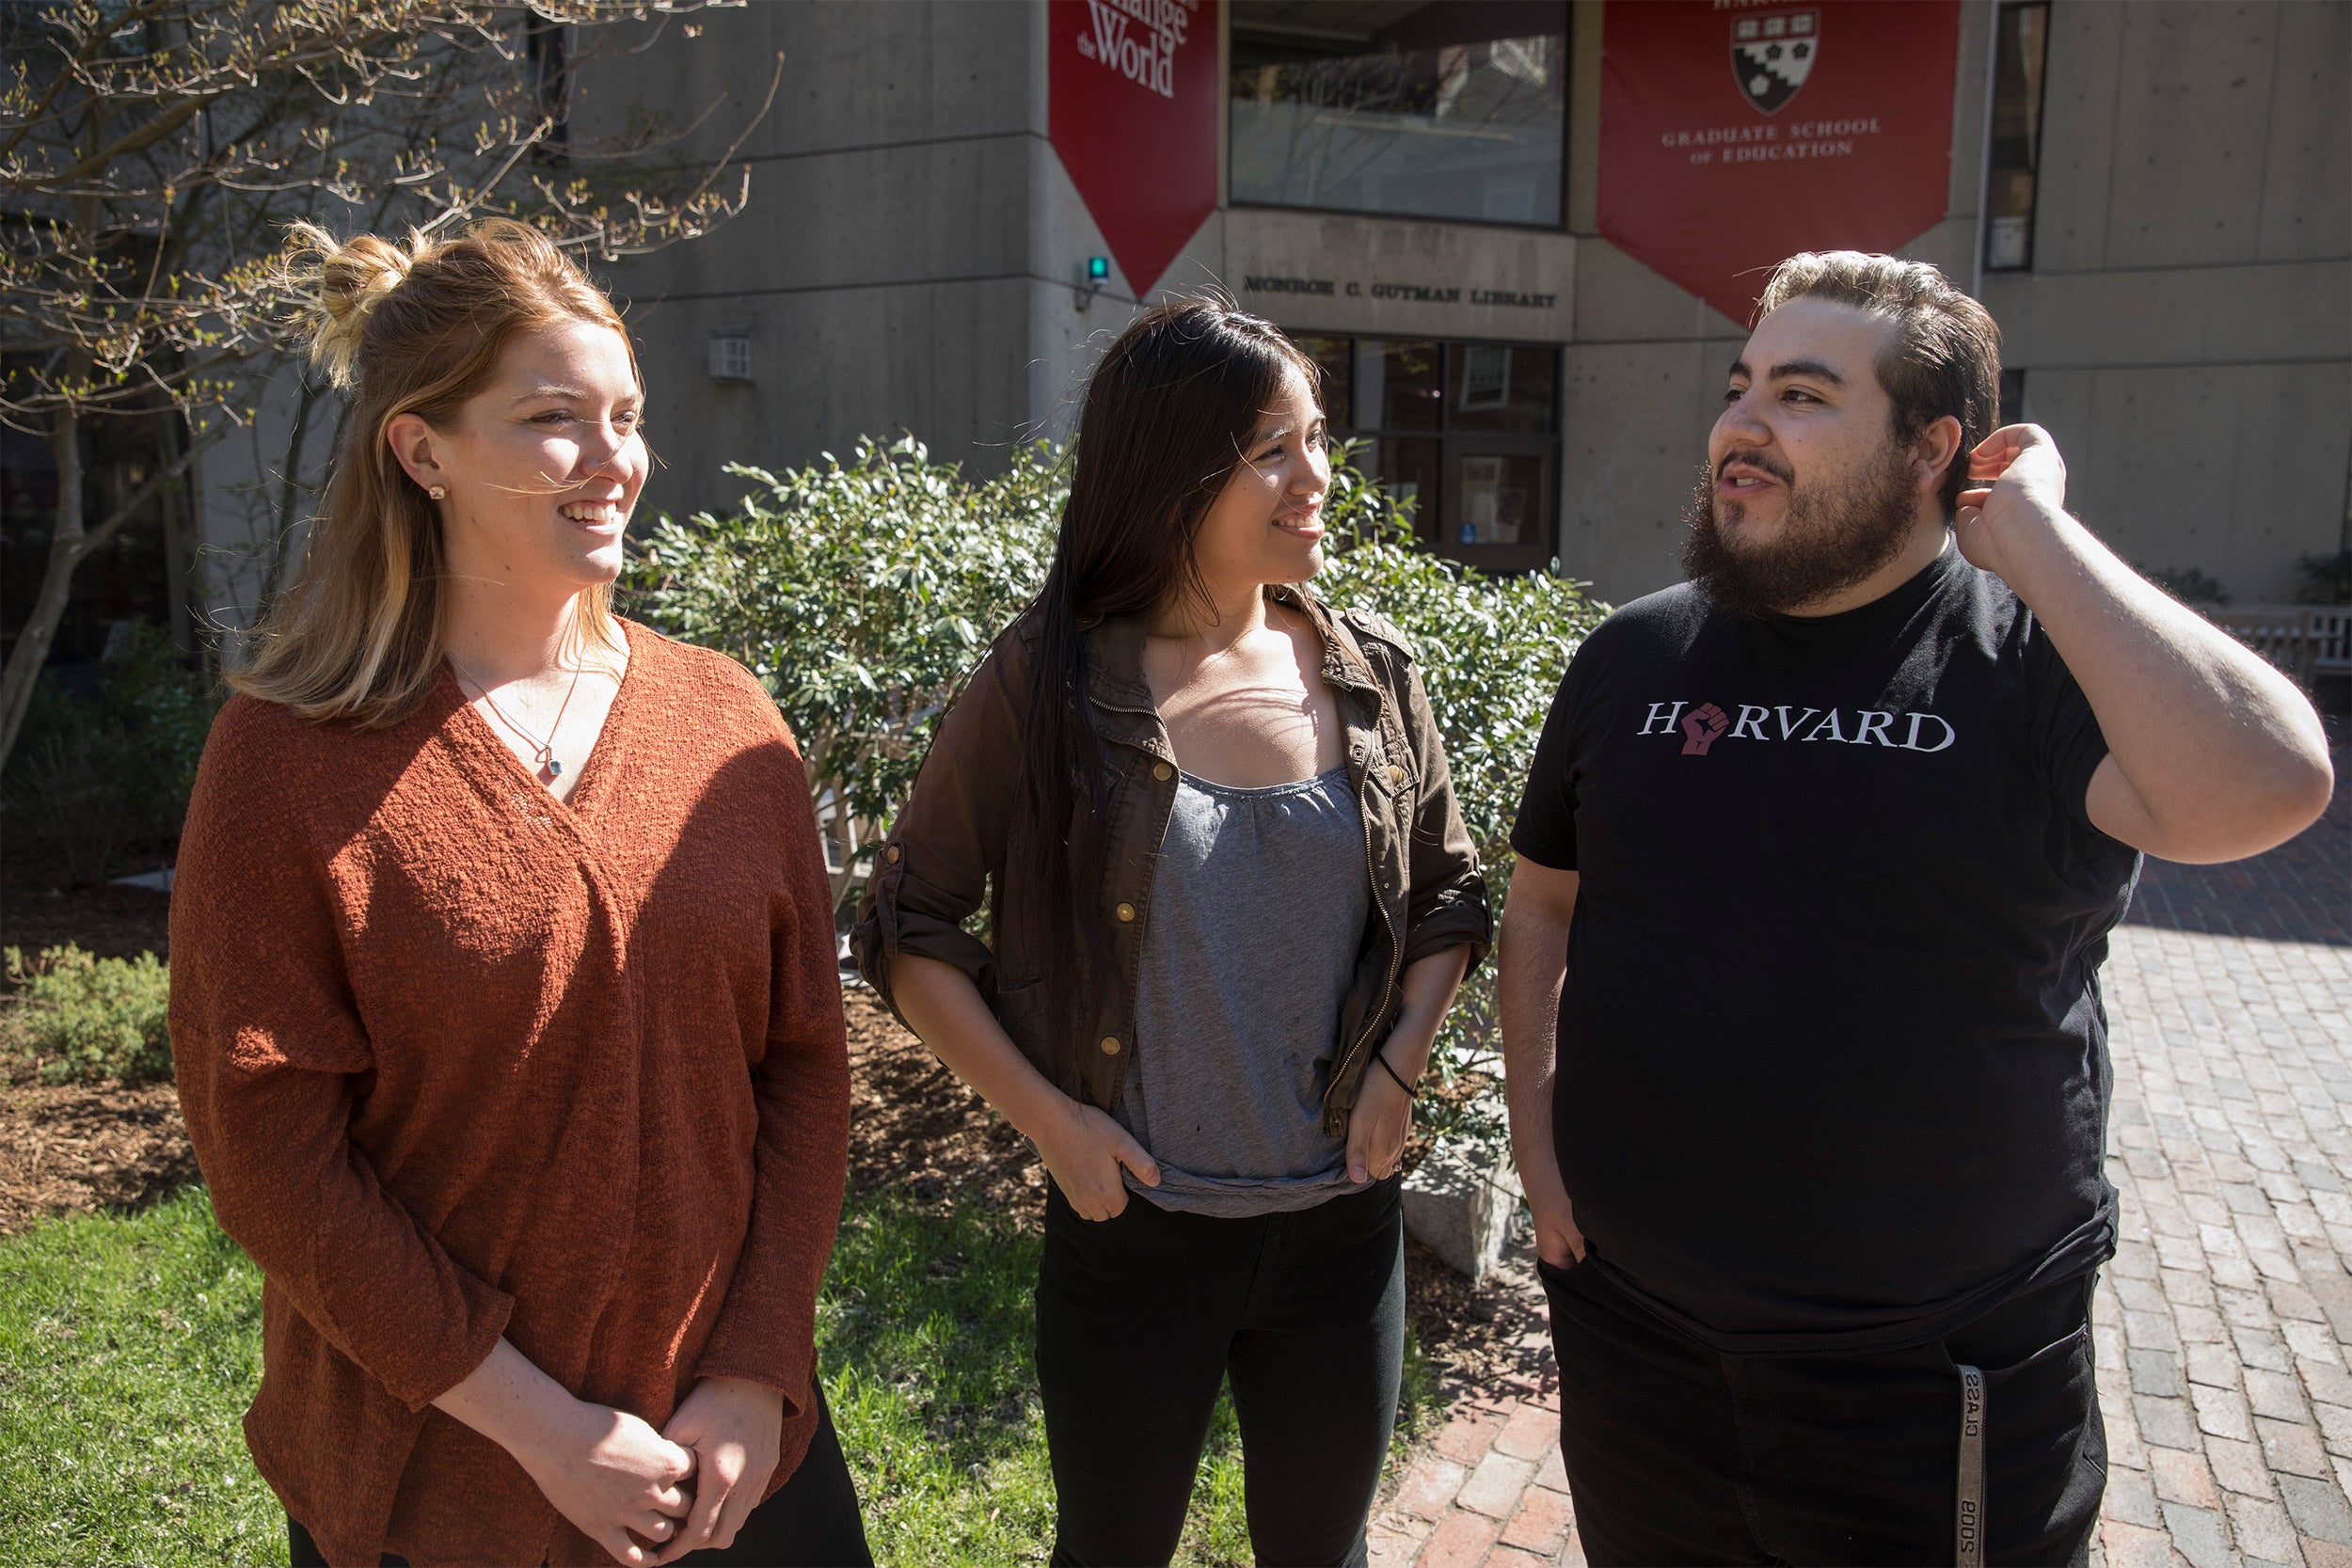 HGSE students, Julia Cunningham, (from left) Morgan Barraza, and Shane Trujillo